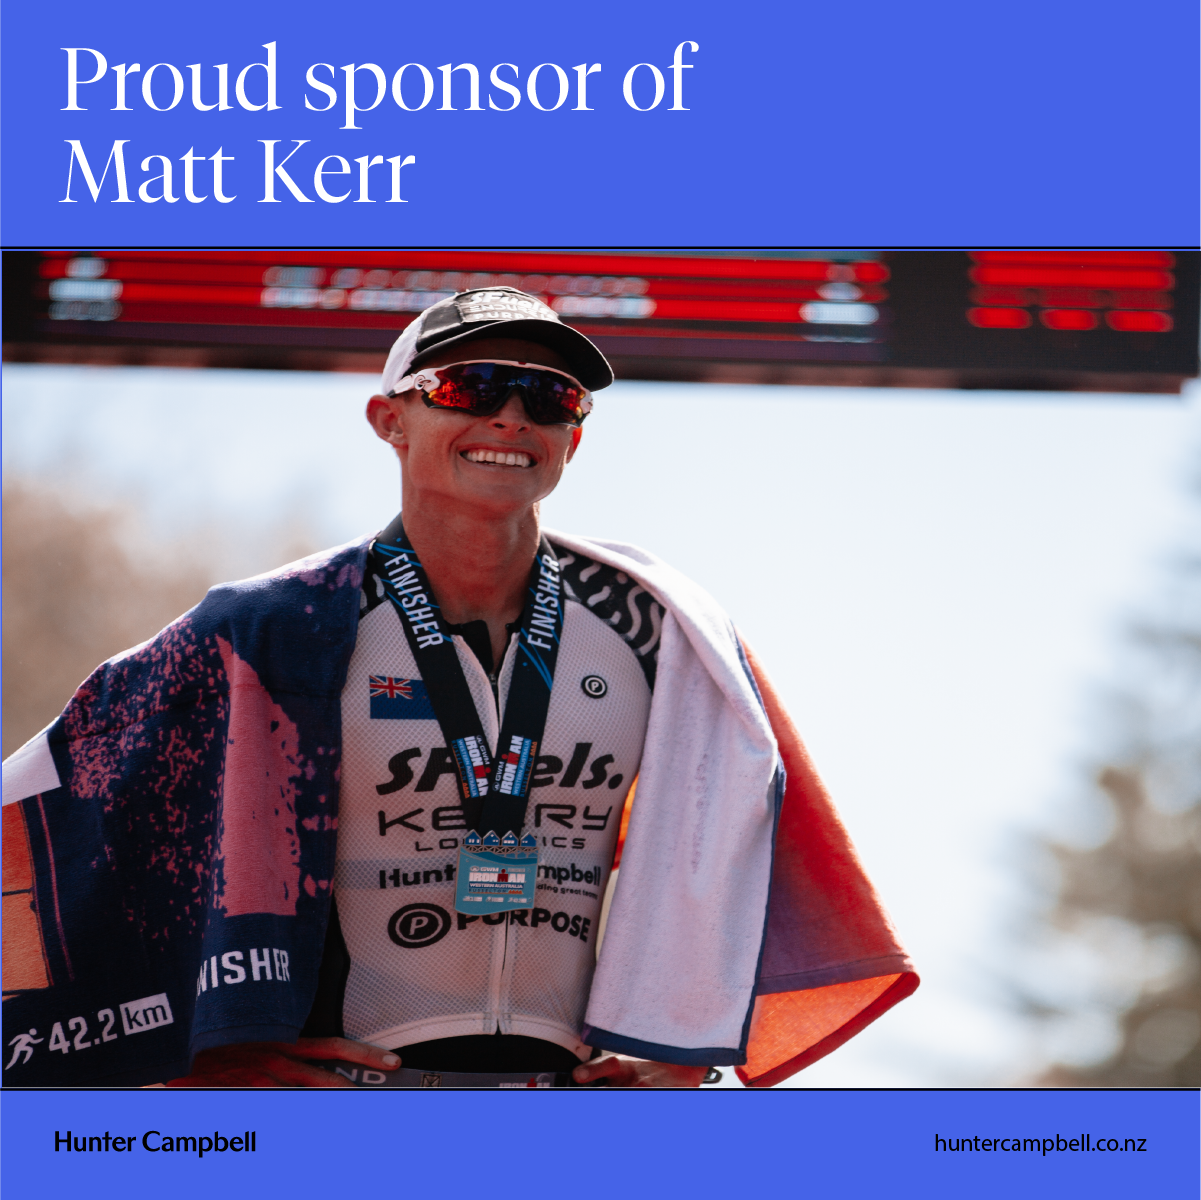 Matt Kerr qualifies for World Champs in Kona!